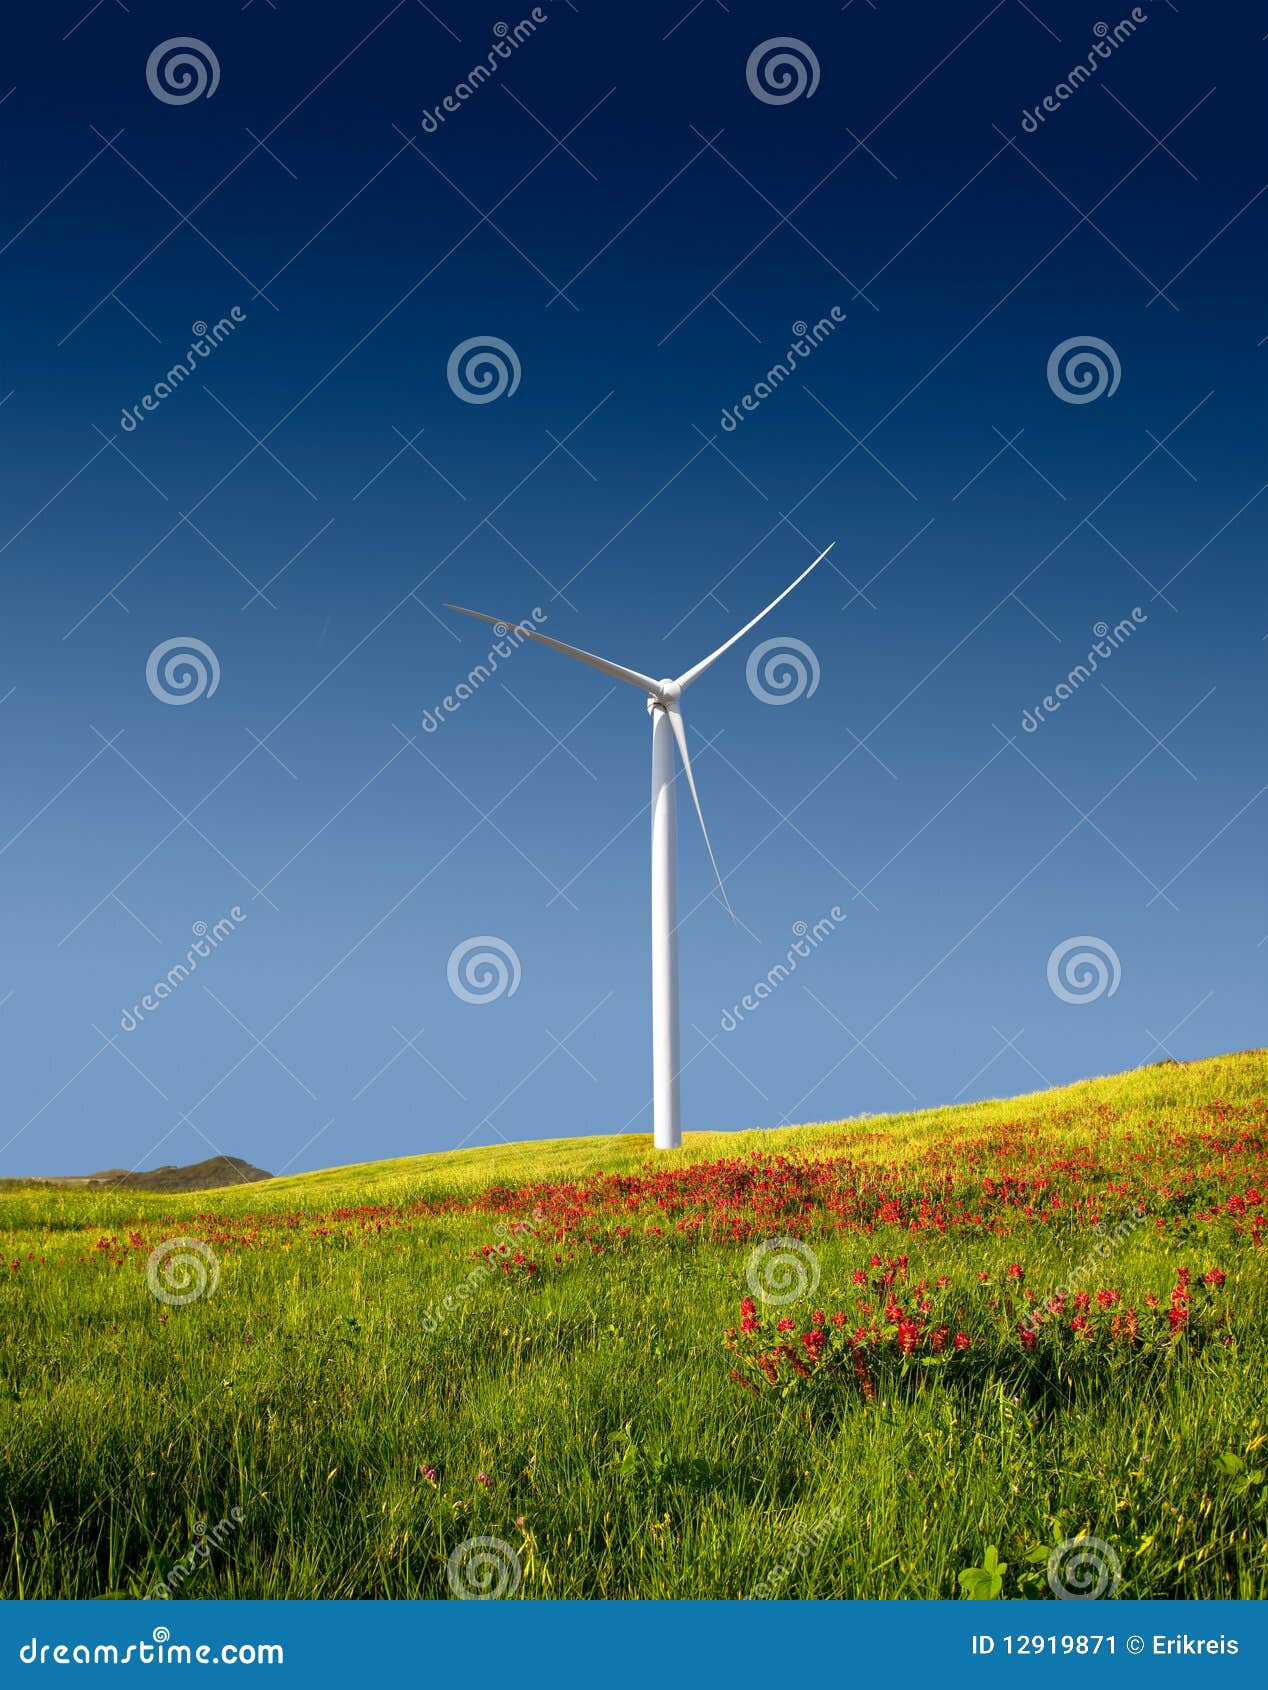 Wind Turbine Stock Image - Image: 12919871